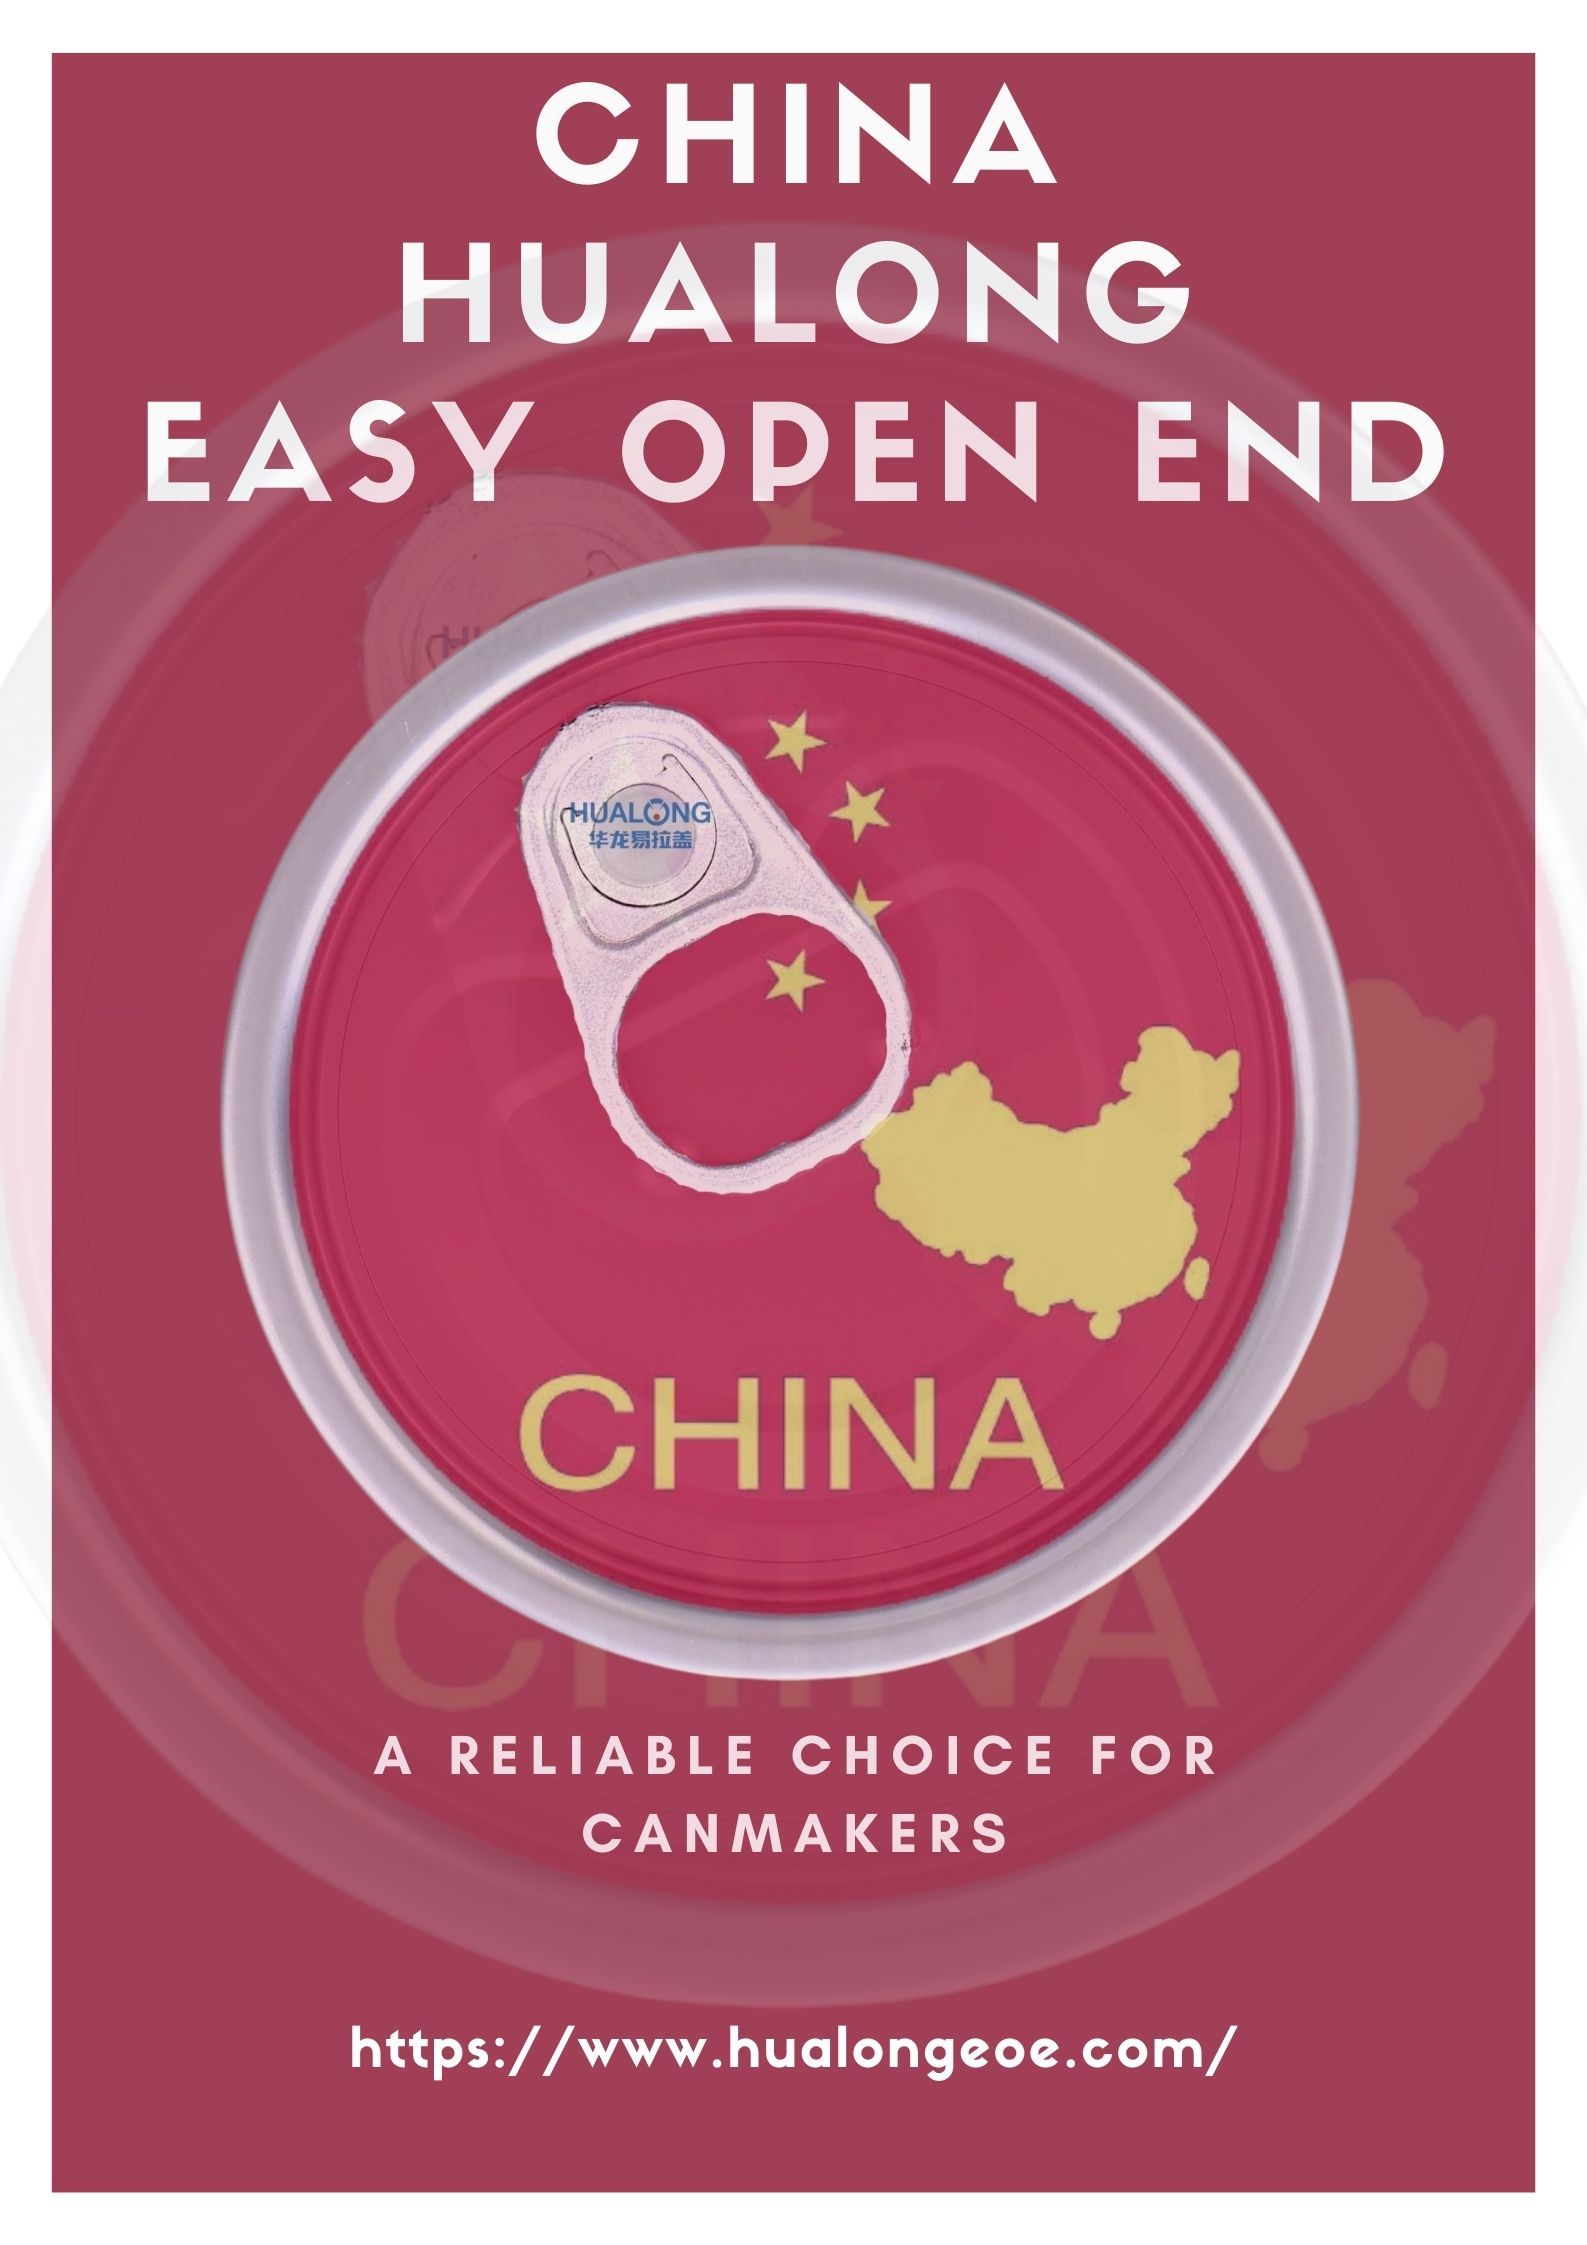 Hualong Easy Open End: Canmakers үшін сенімді таңдау